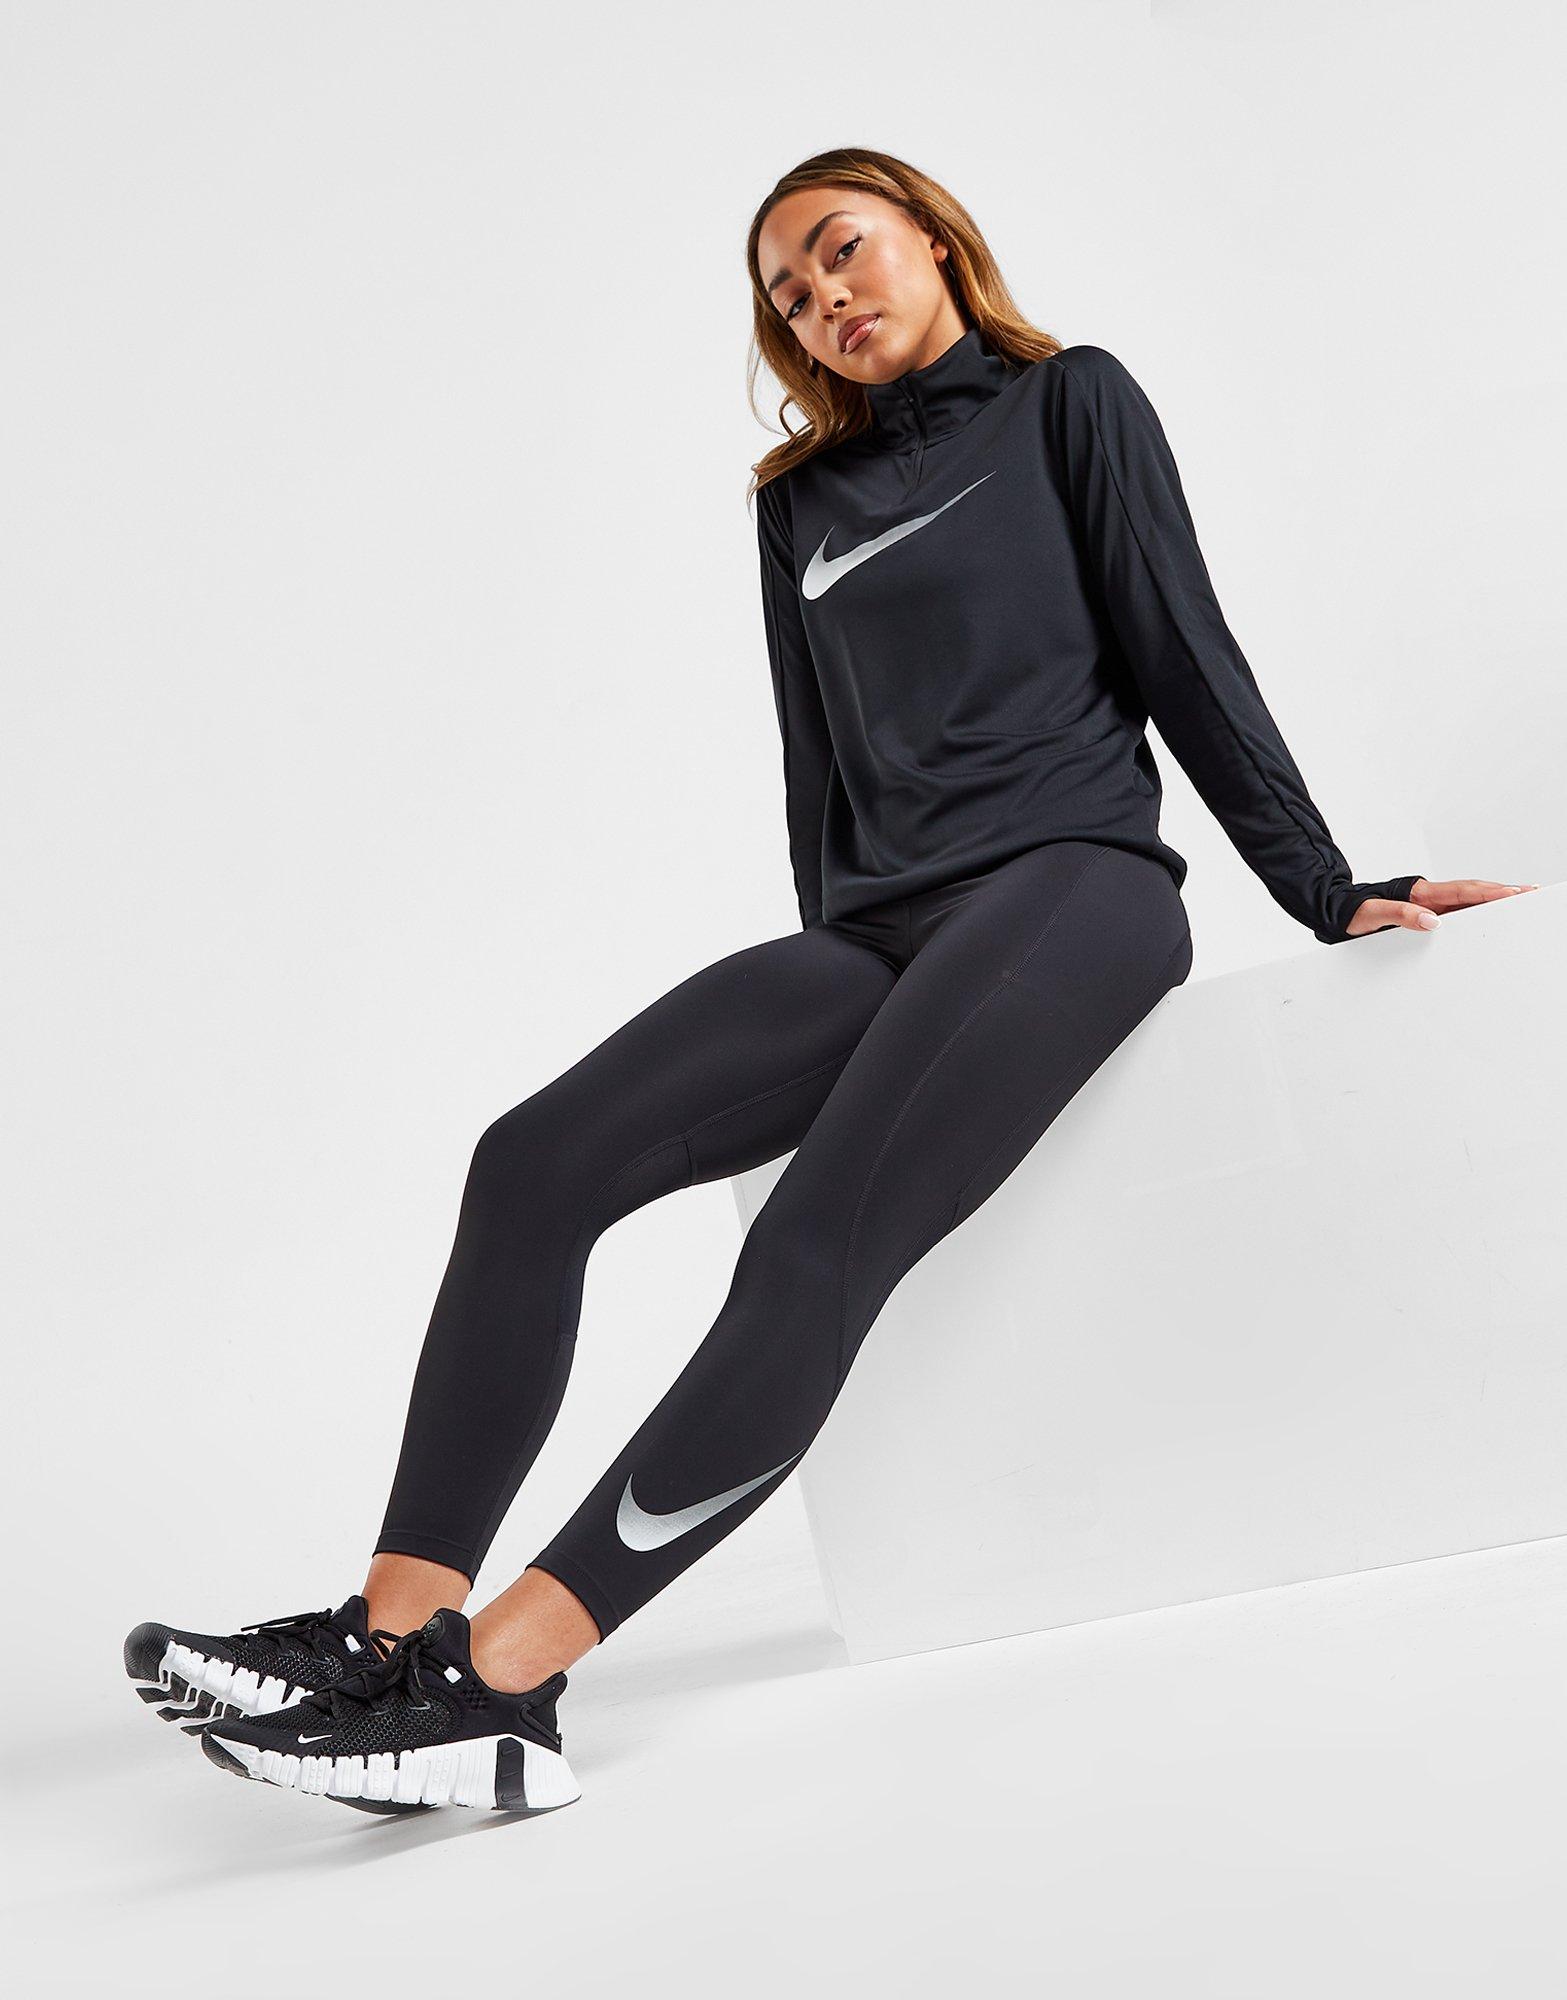 Nike Women's PWR CLASSIC GYM PANT PANTS, Black (Black ), Small